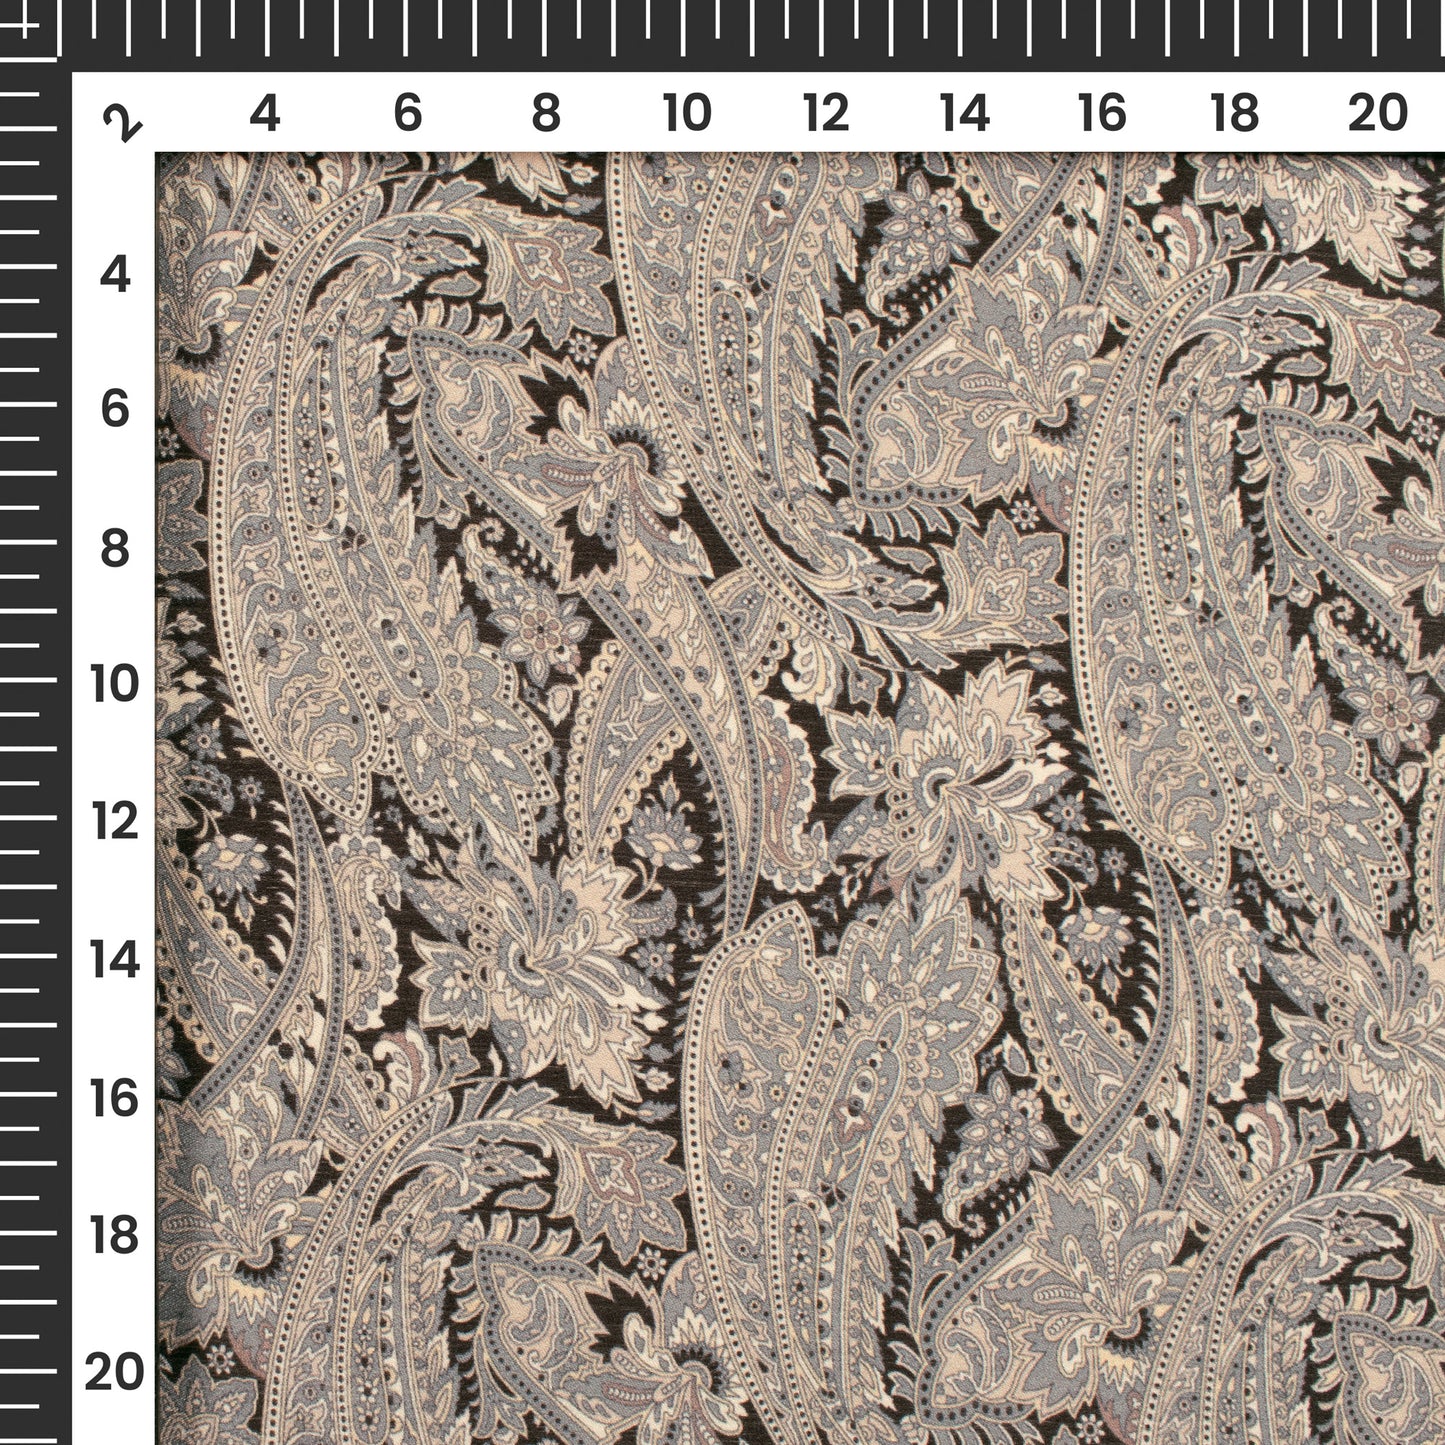 Gray Paisley Digital Print Chiffon Satin Fabric